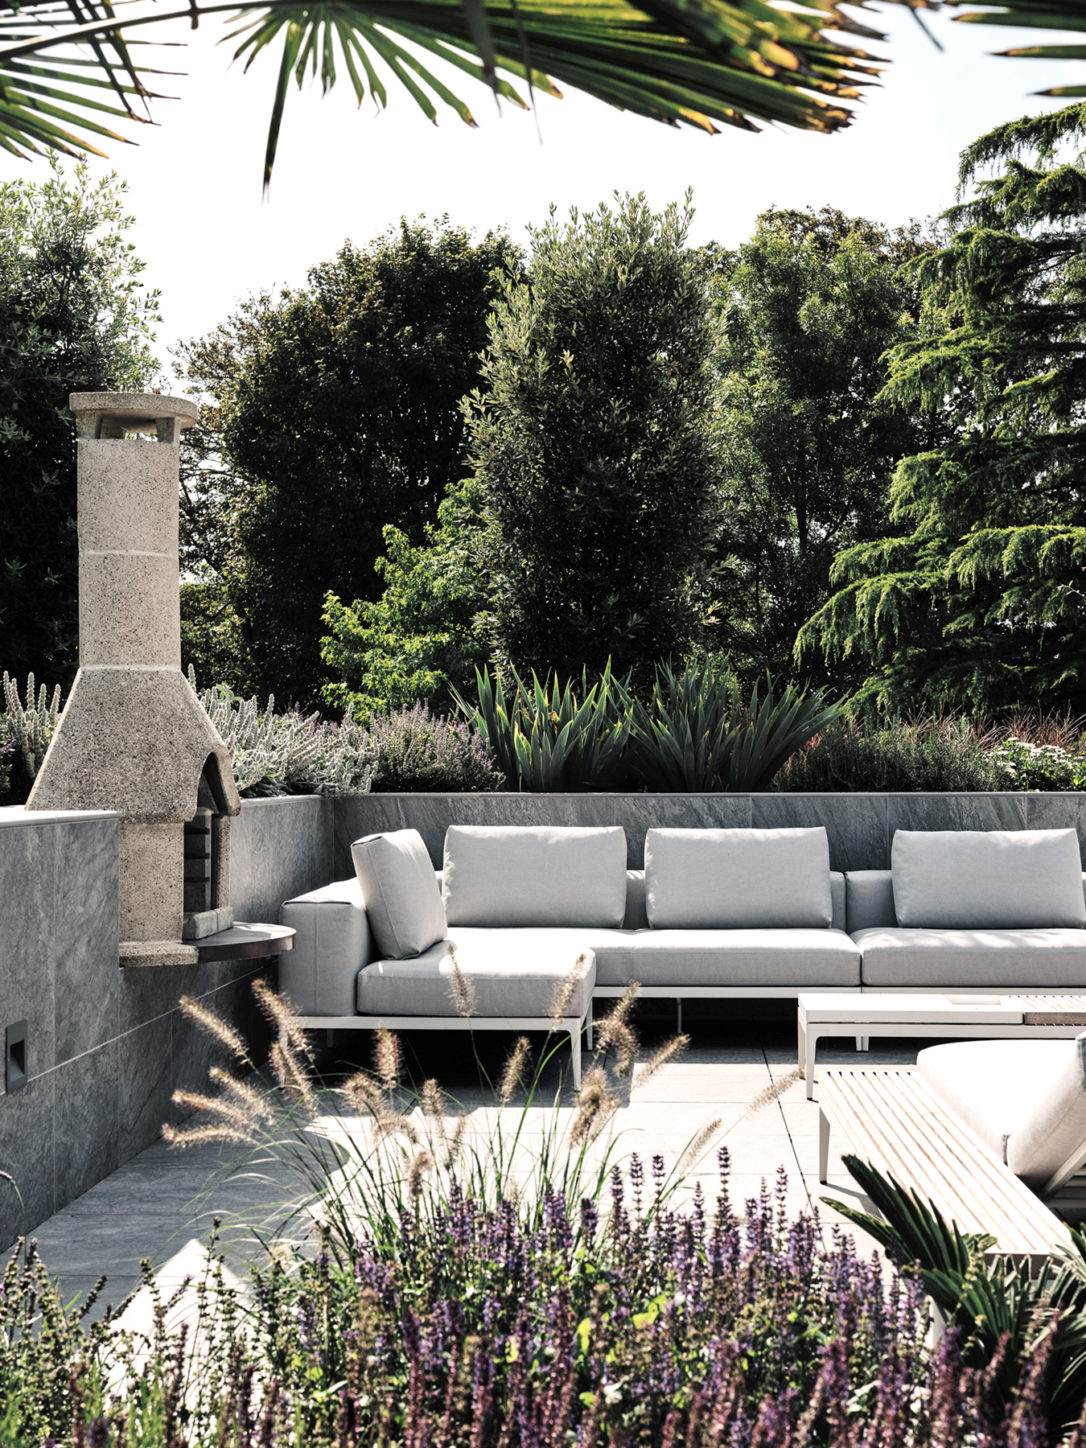 Luxury garden and chimenea